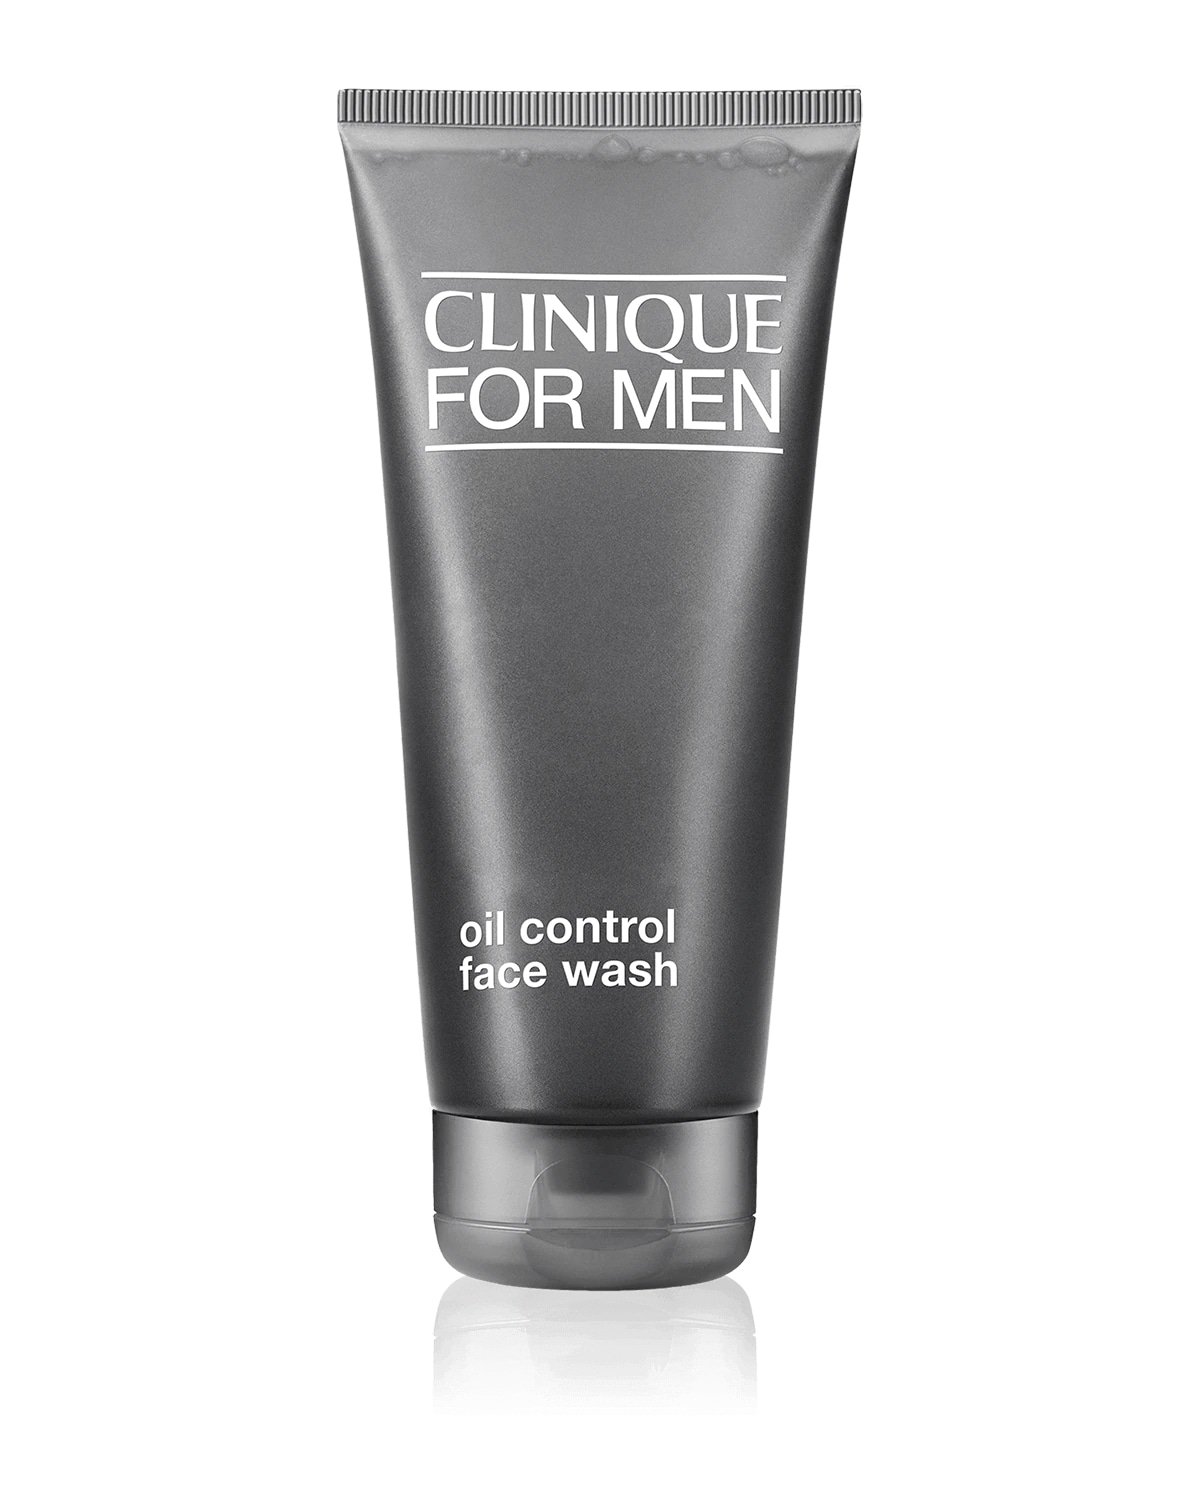 Clinique For Men™ Face Wash Oily Skin Formula